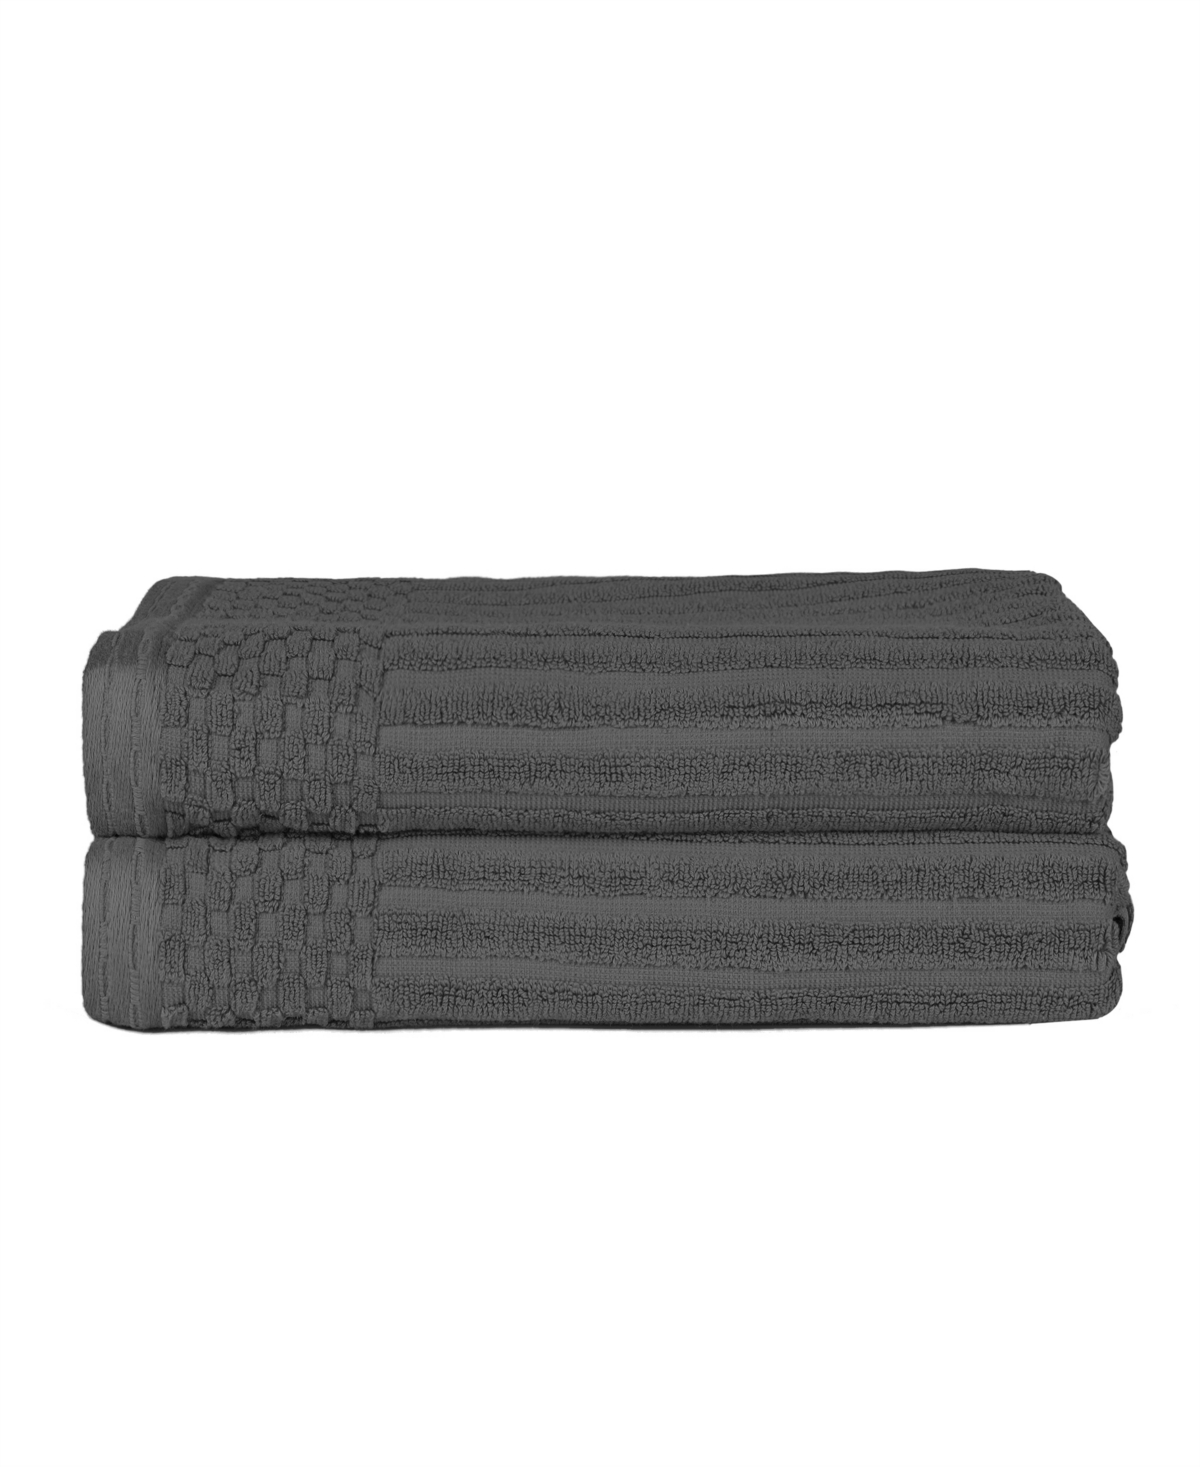 Superior Soho Checkered Border Cotton 2 Piece Bath Towel Set, 54" X 27" In Charcoal